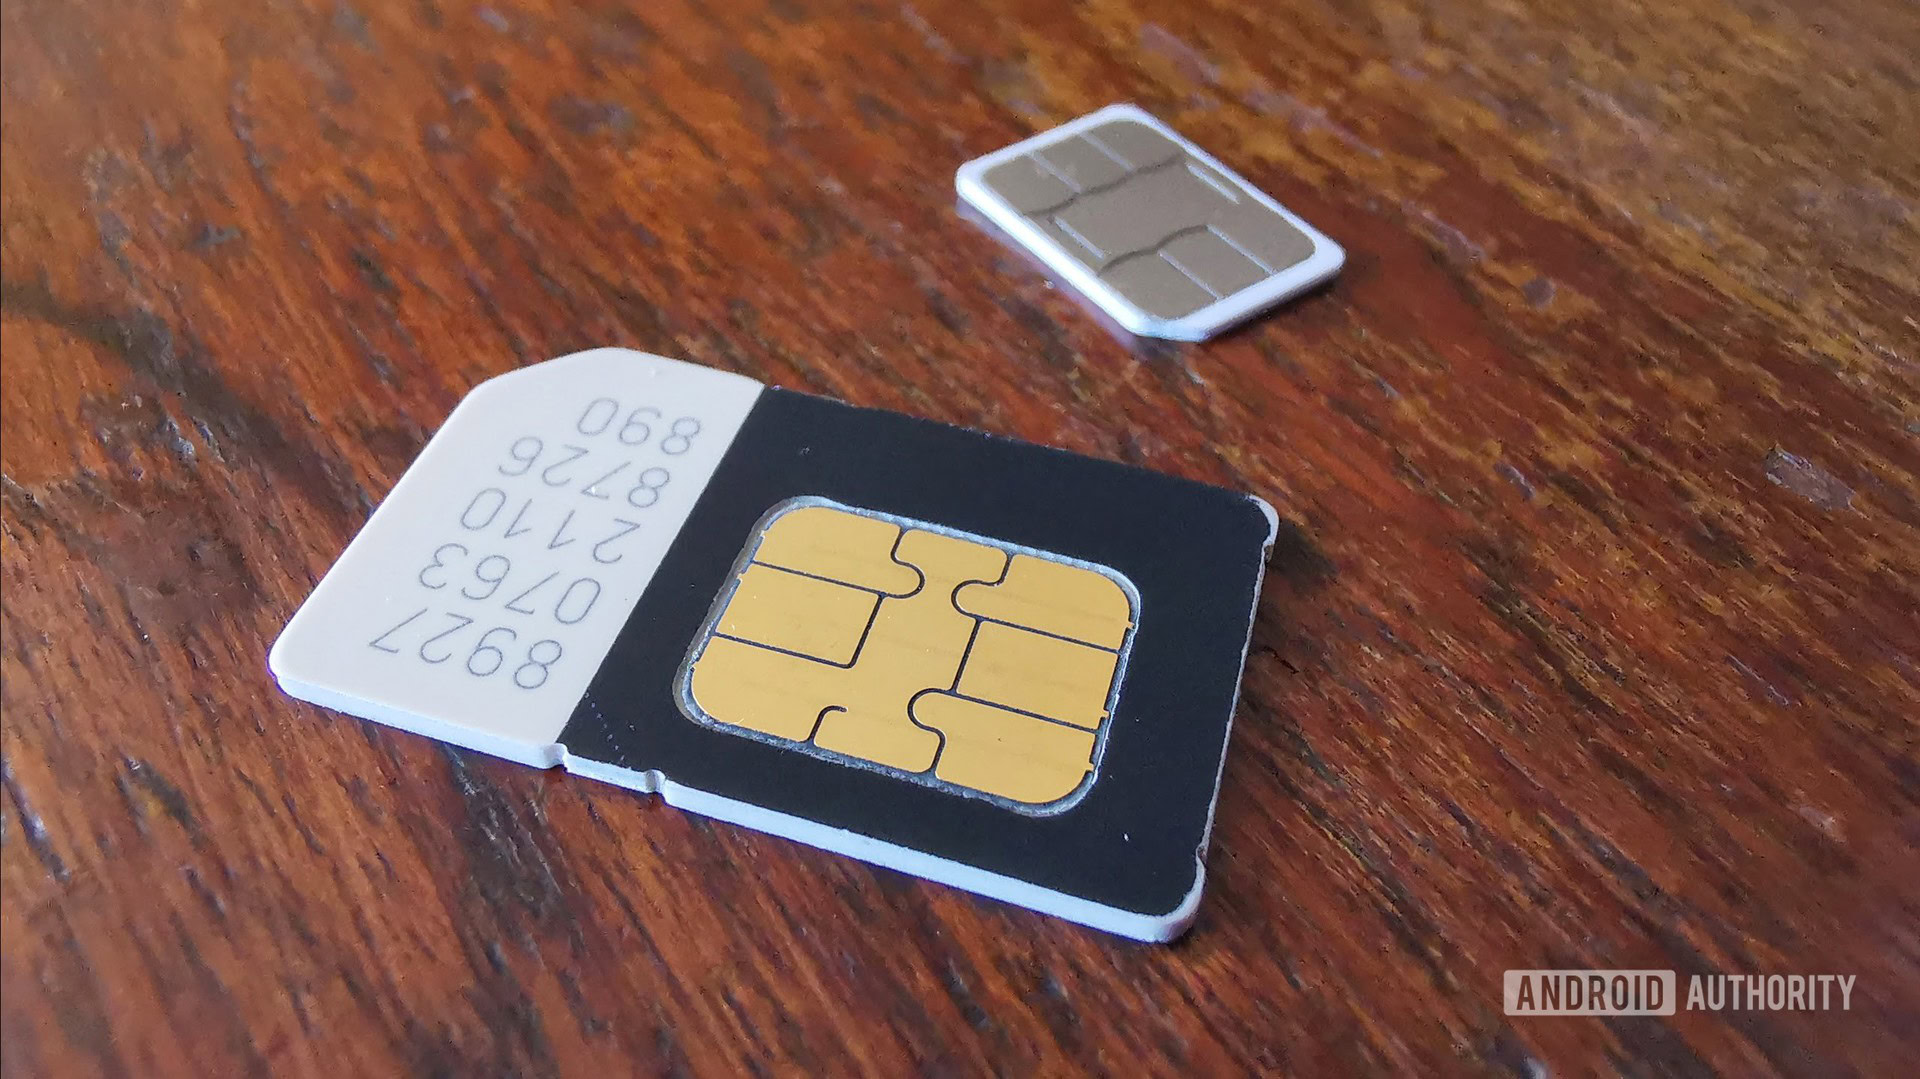 SIM Card Holder Case slim & compact, Credit Card Style